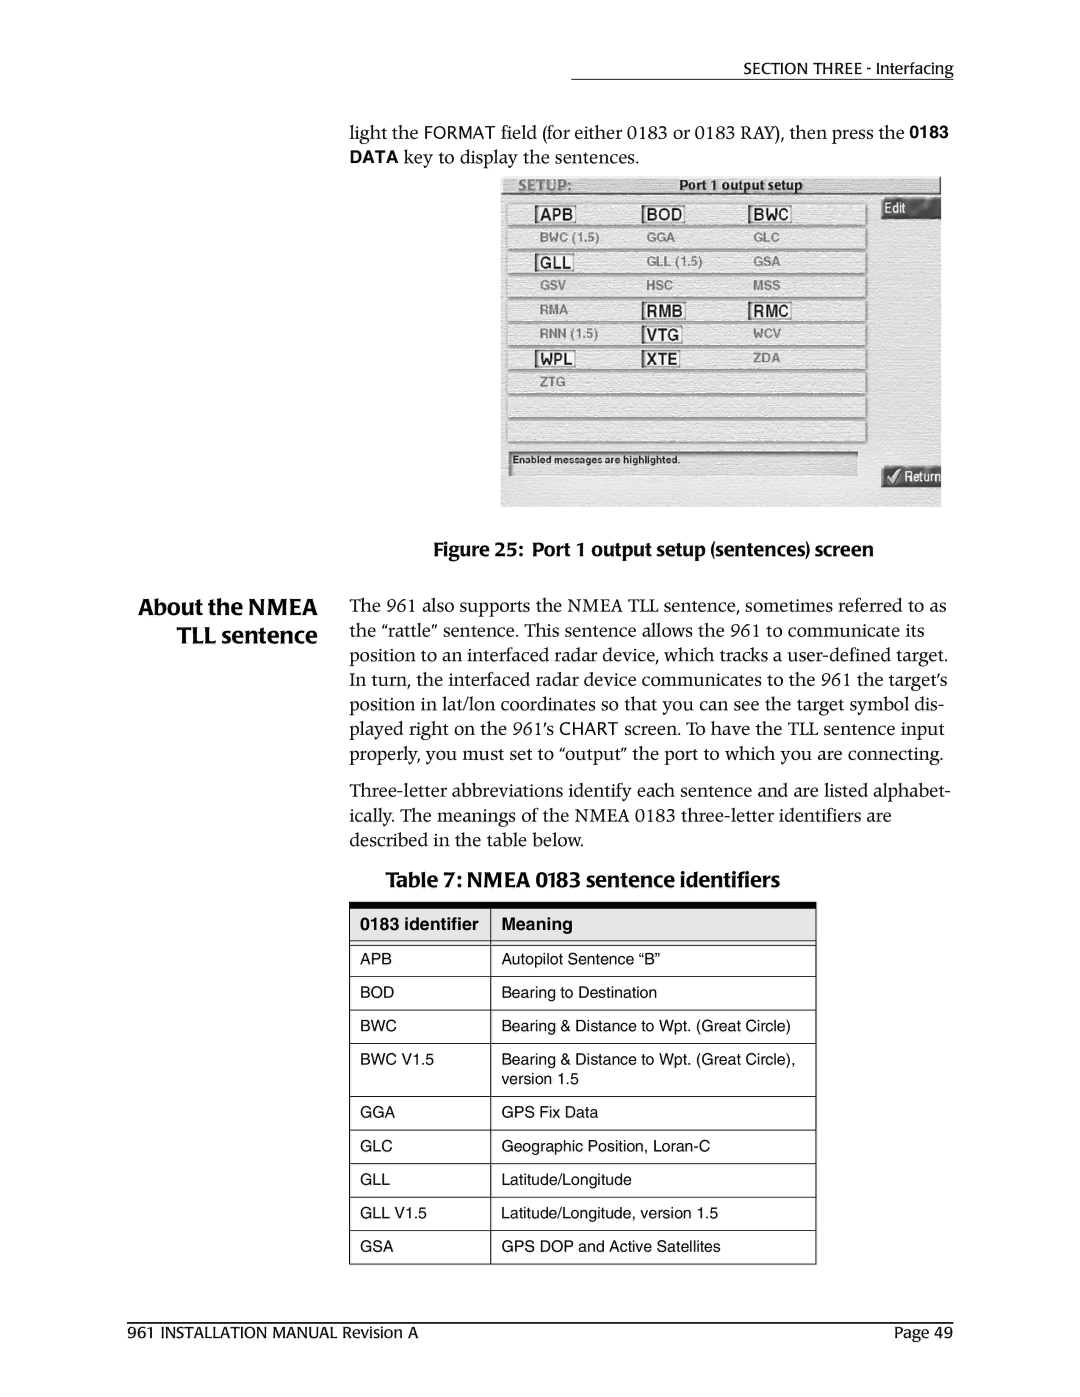 NorthStar Navigation 961XD installation manual About the Nmea TLL sentence, Nmea 0183 sentence identifiers 